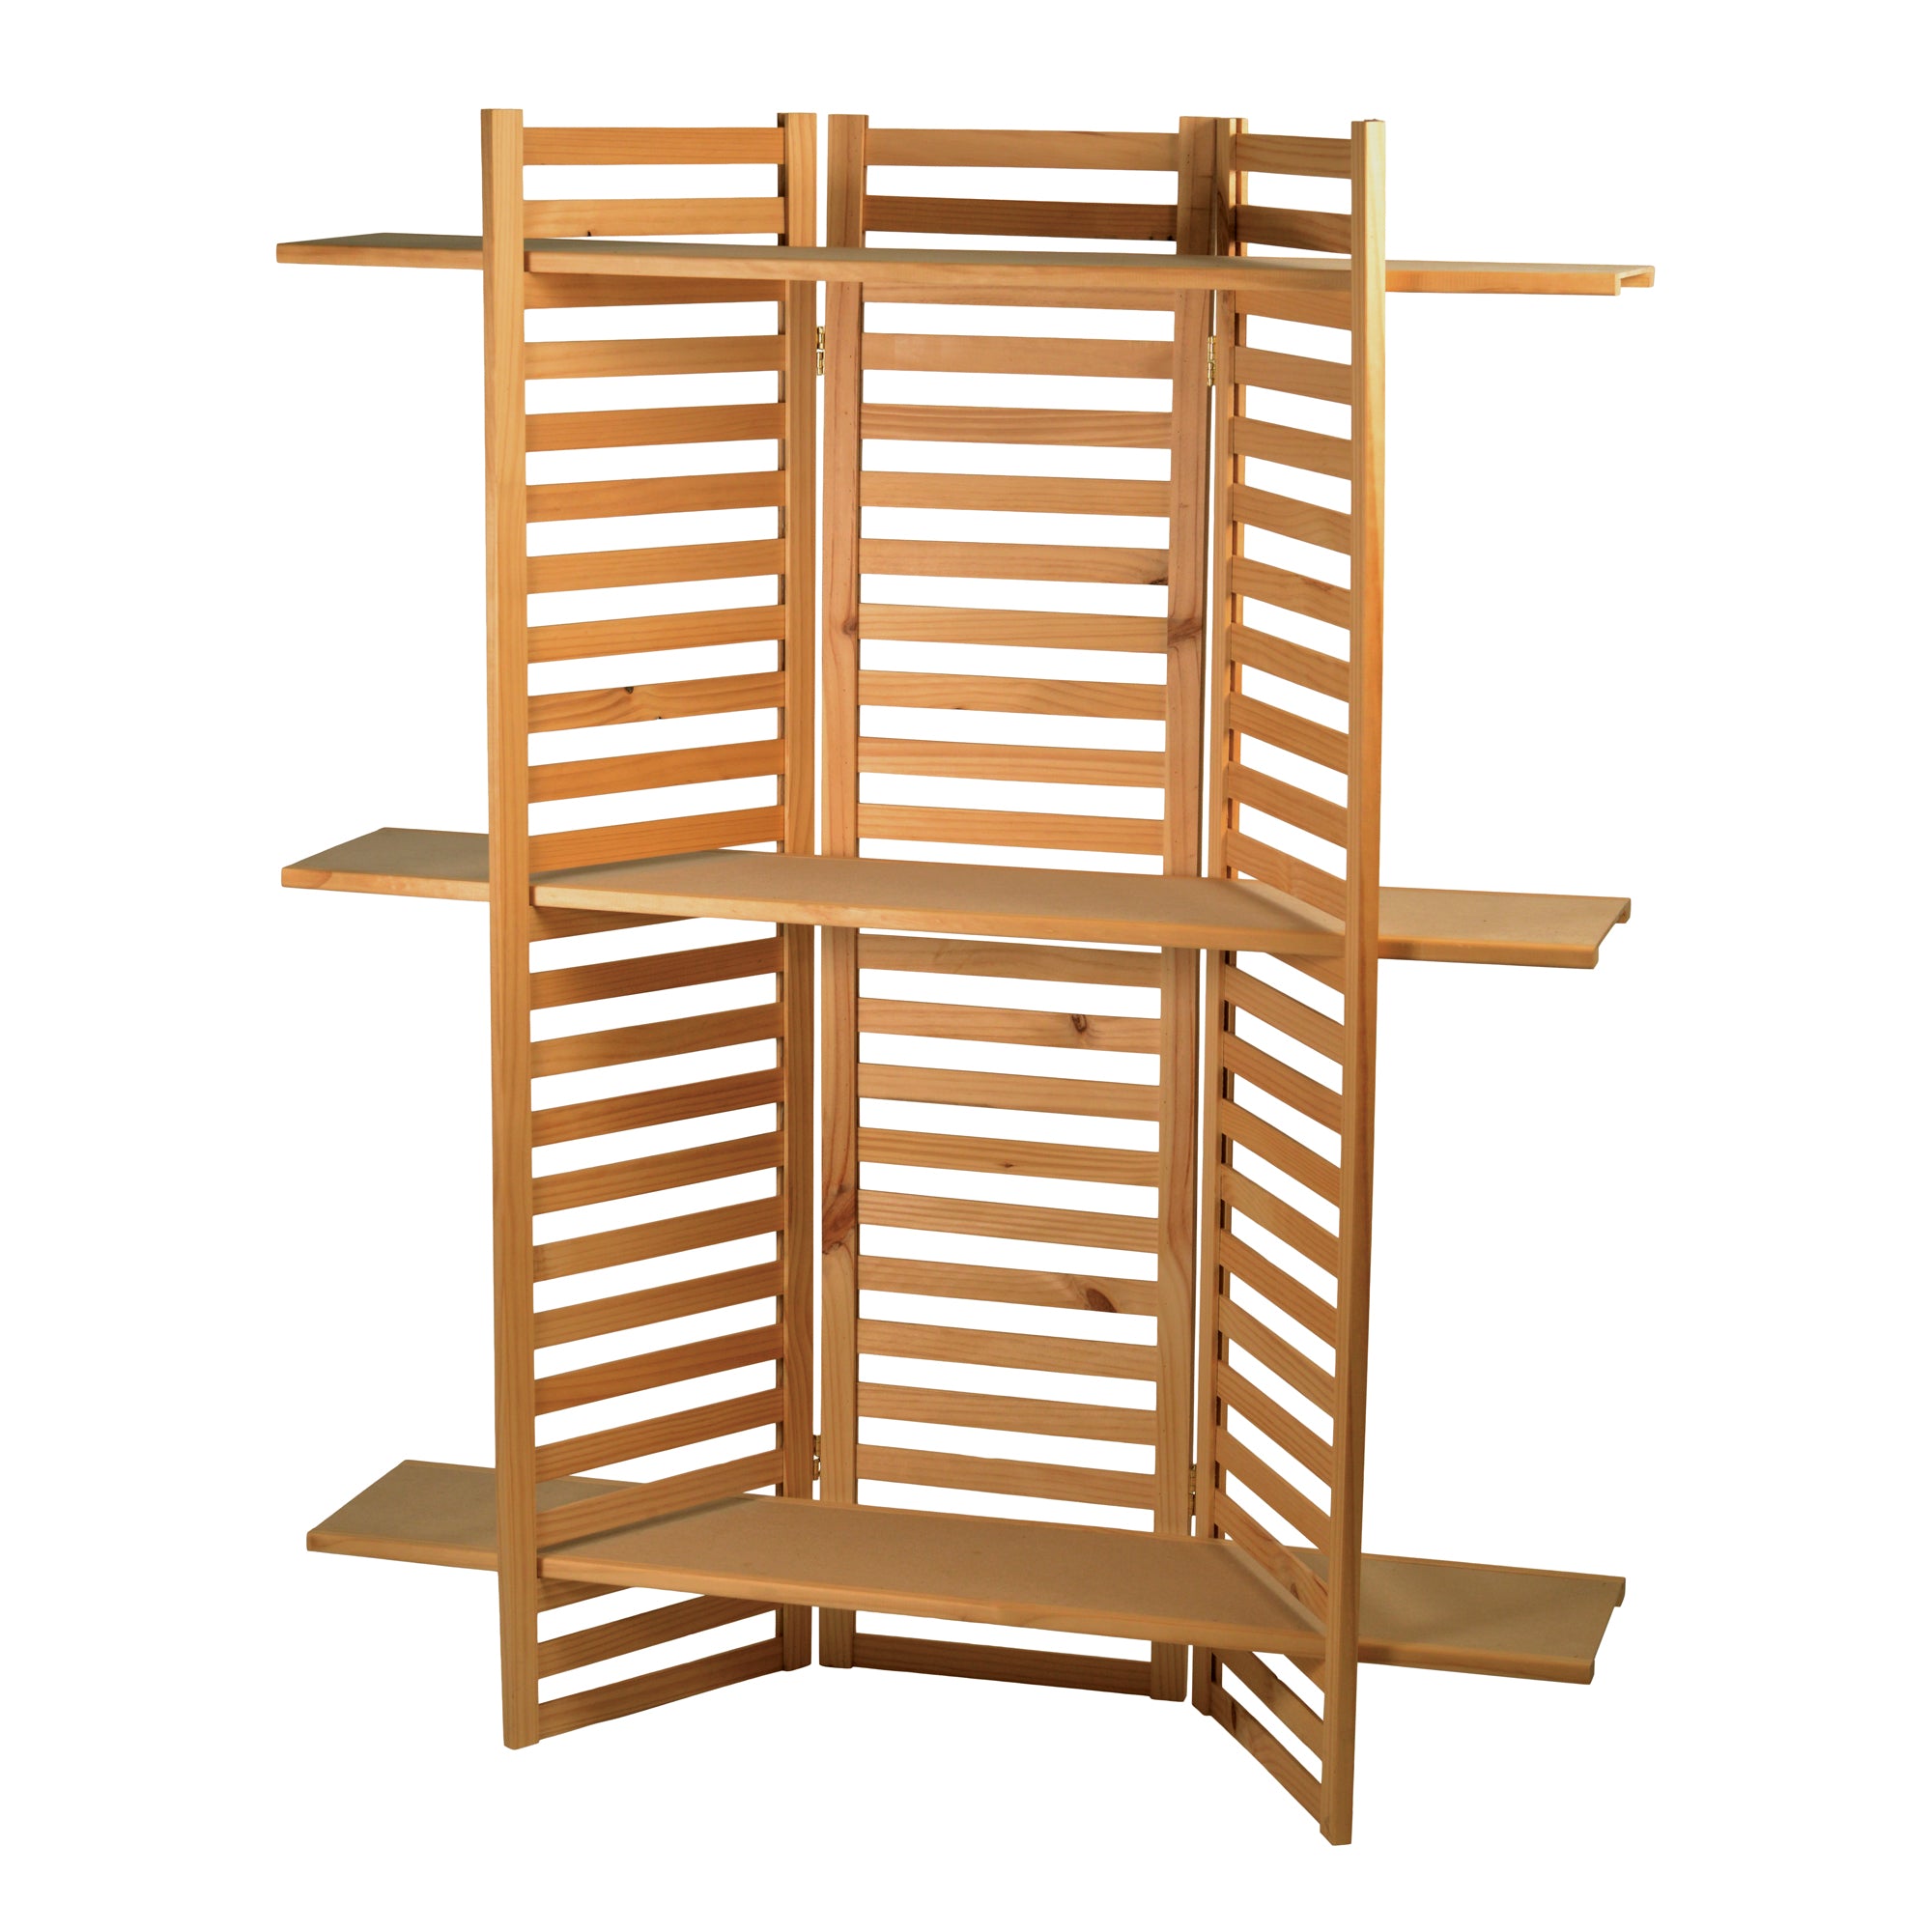 Wooden Folding Retail Shelving Unit | Pine